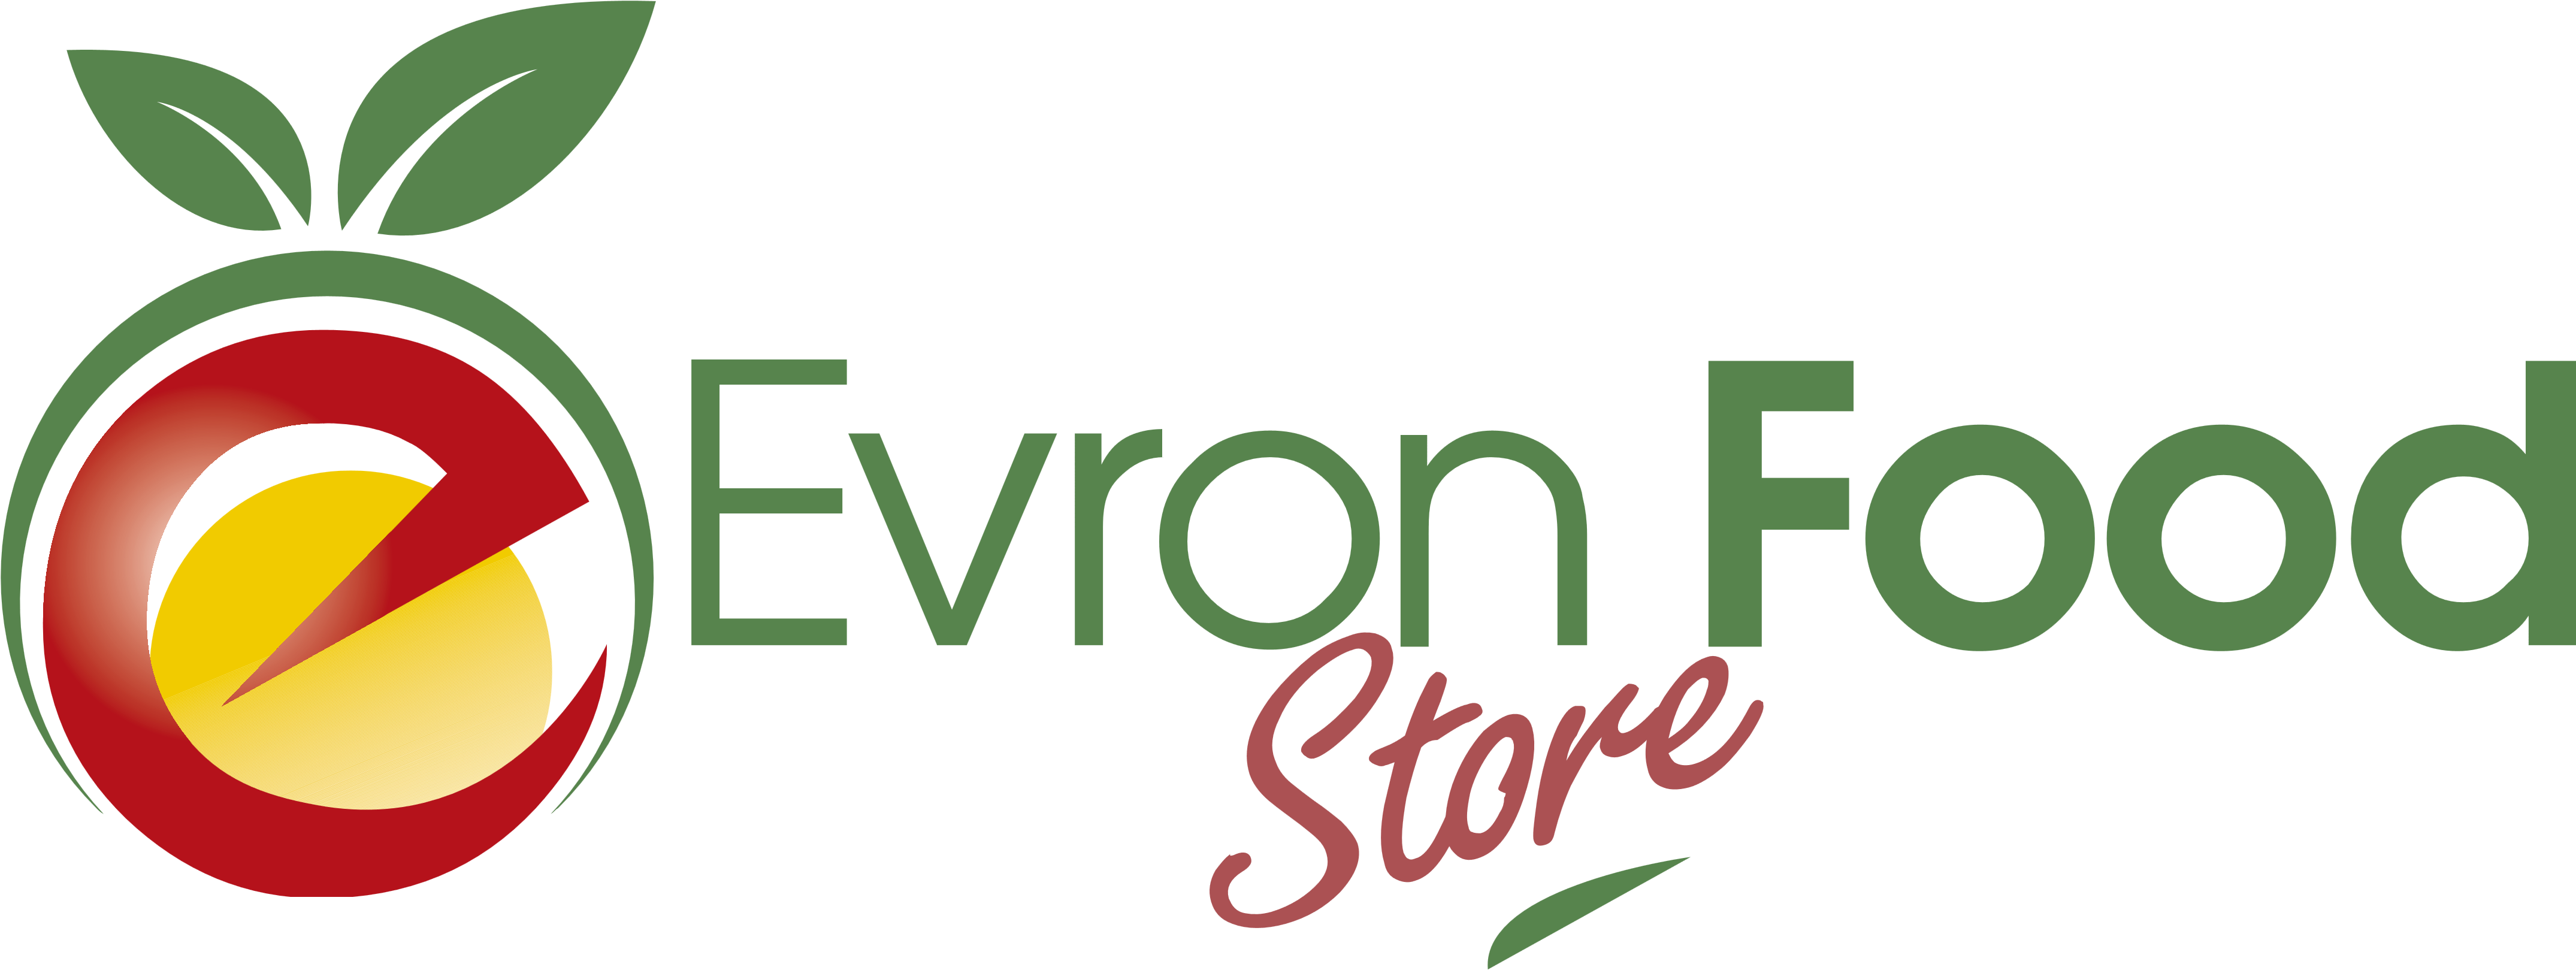 Evron Food Store Logos Download Rh Logos Download Com - Evron Food Store (4300x1720)